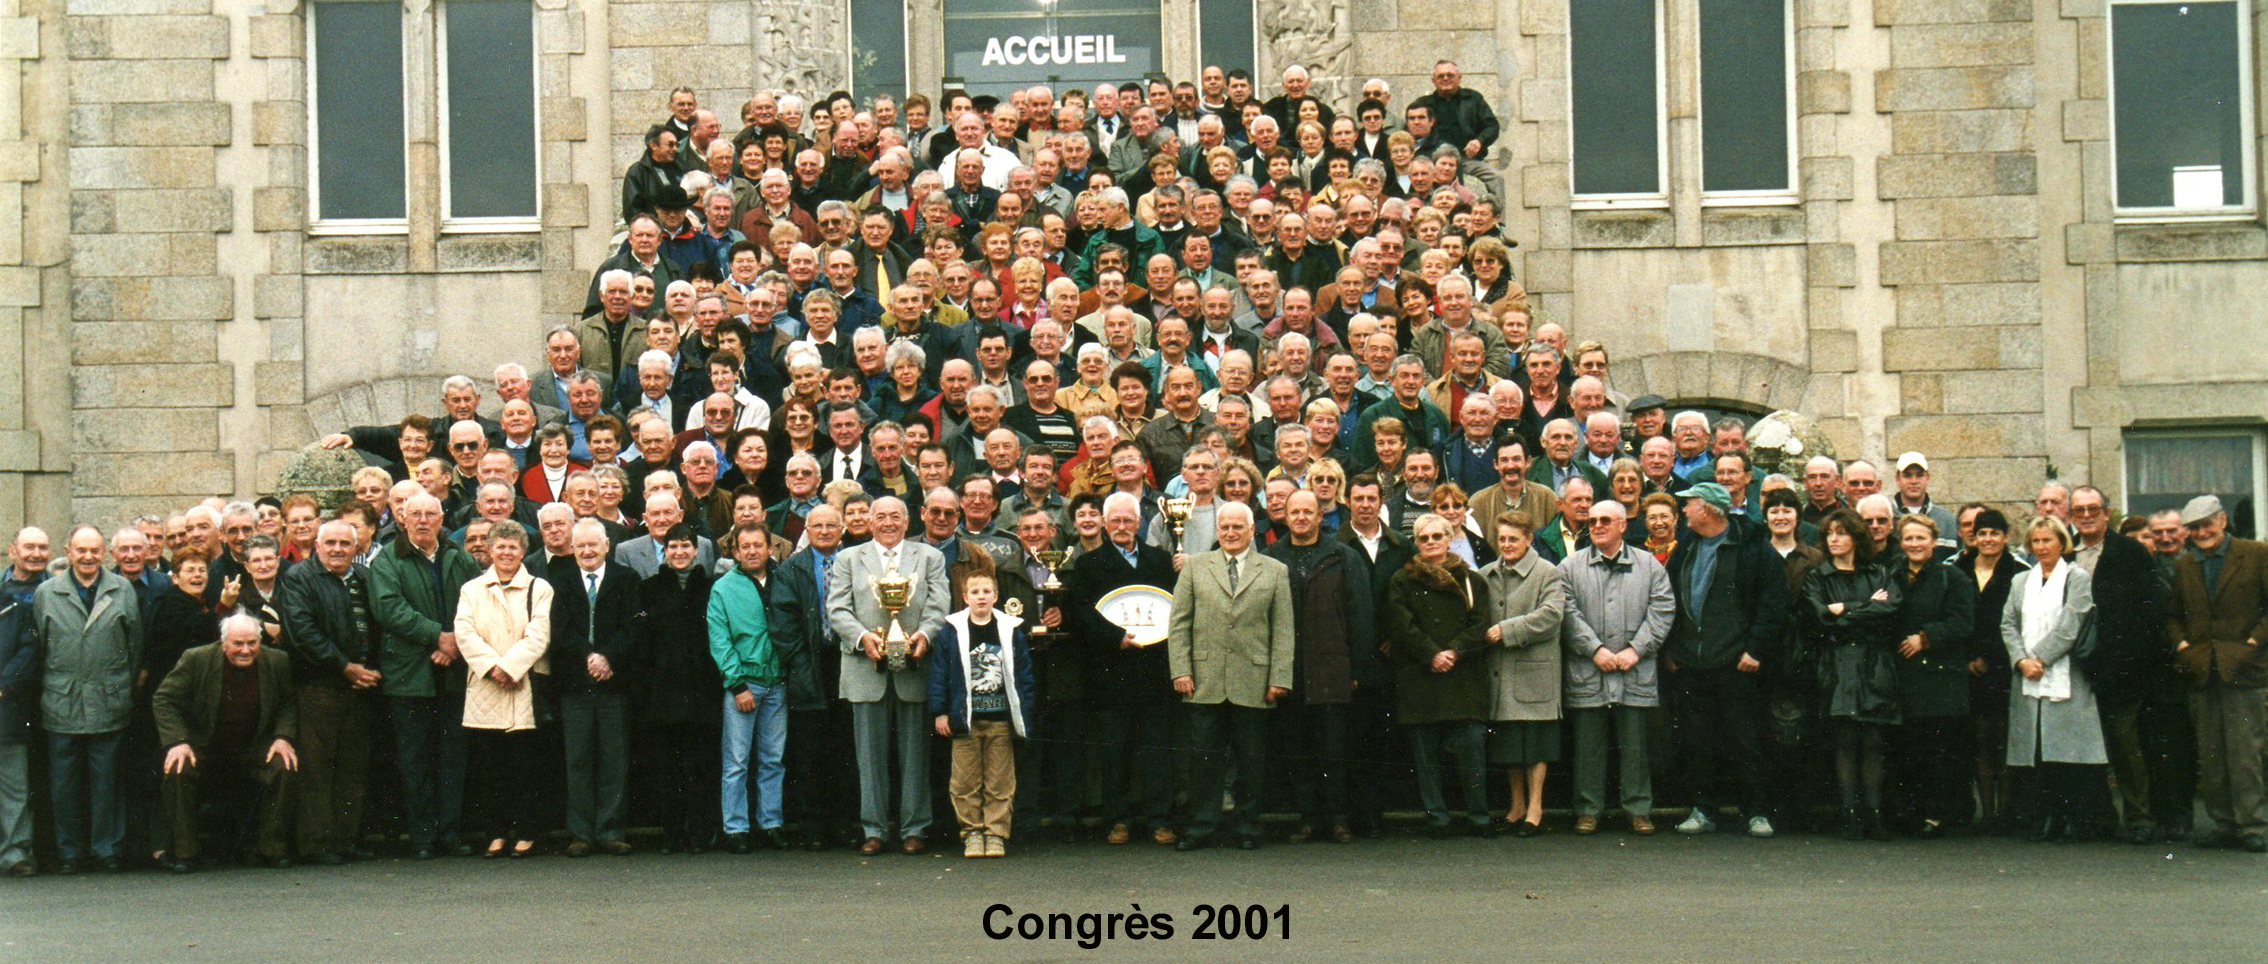 congrès 2001